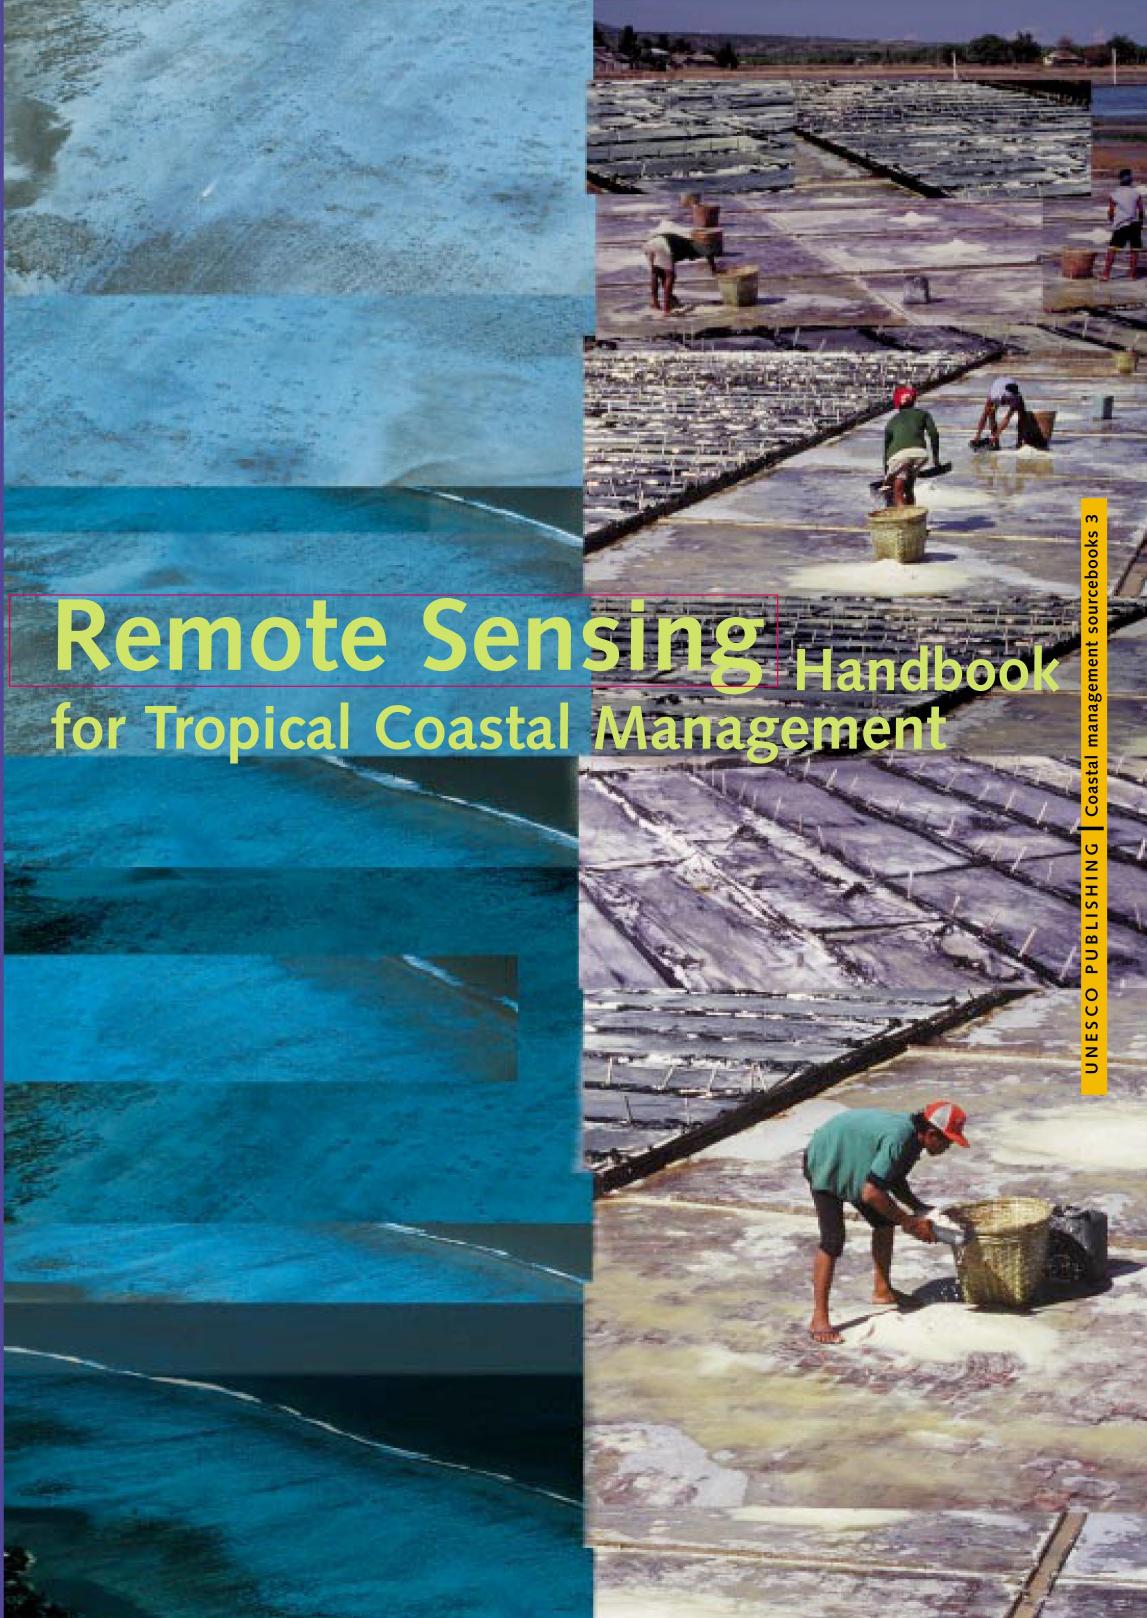 Remote sensing handbook for tropical coastal management; Coastal management sourcebooks; Vol.:3; 2000